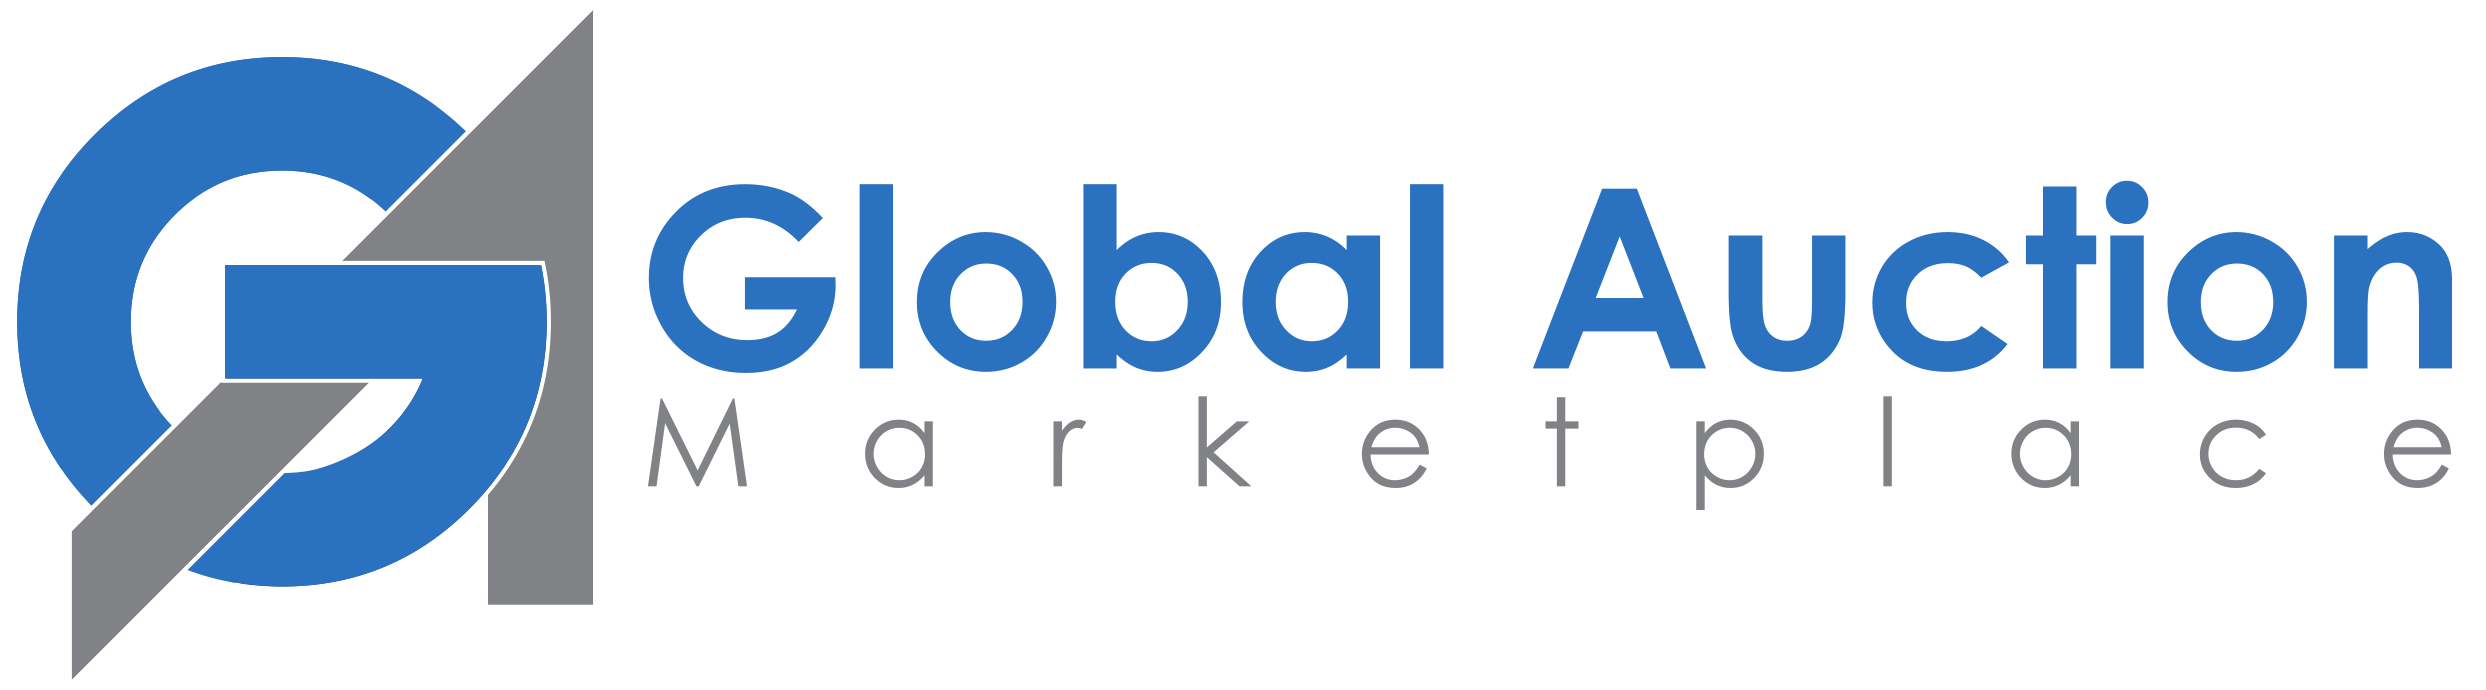 Global Auction Marketplace